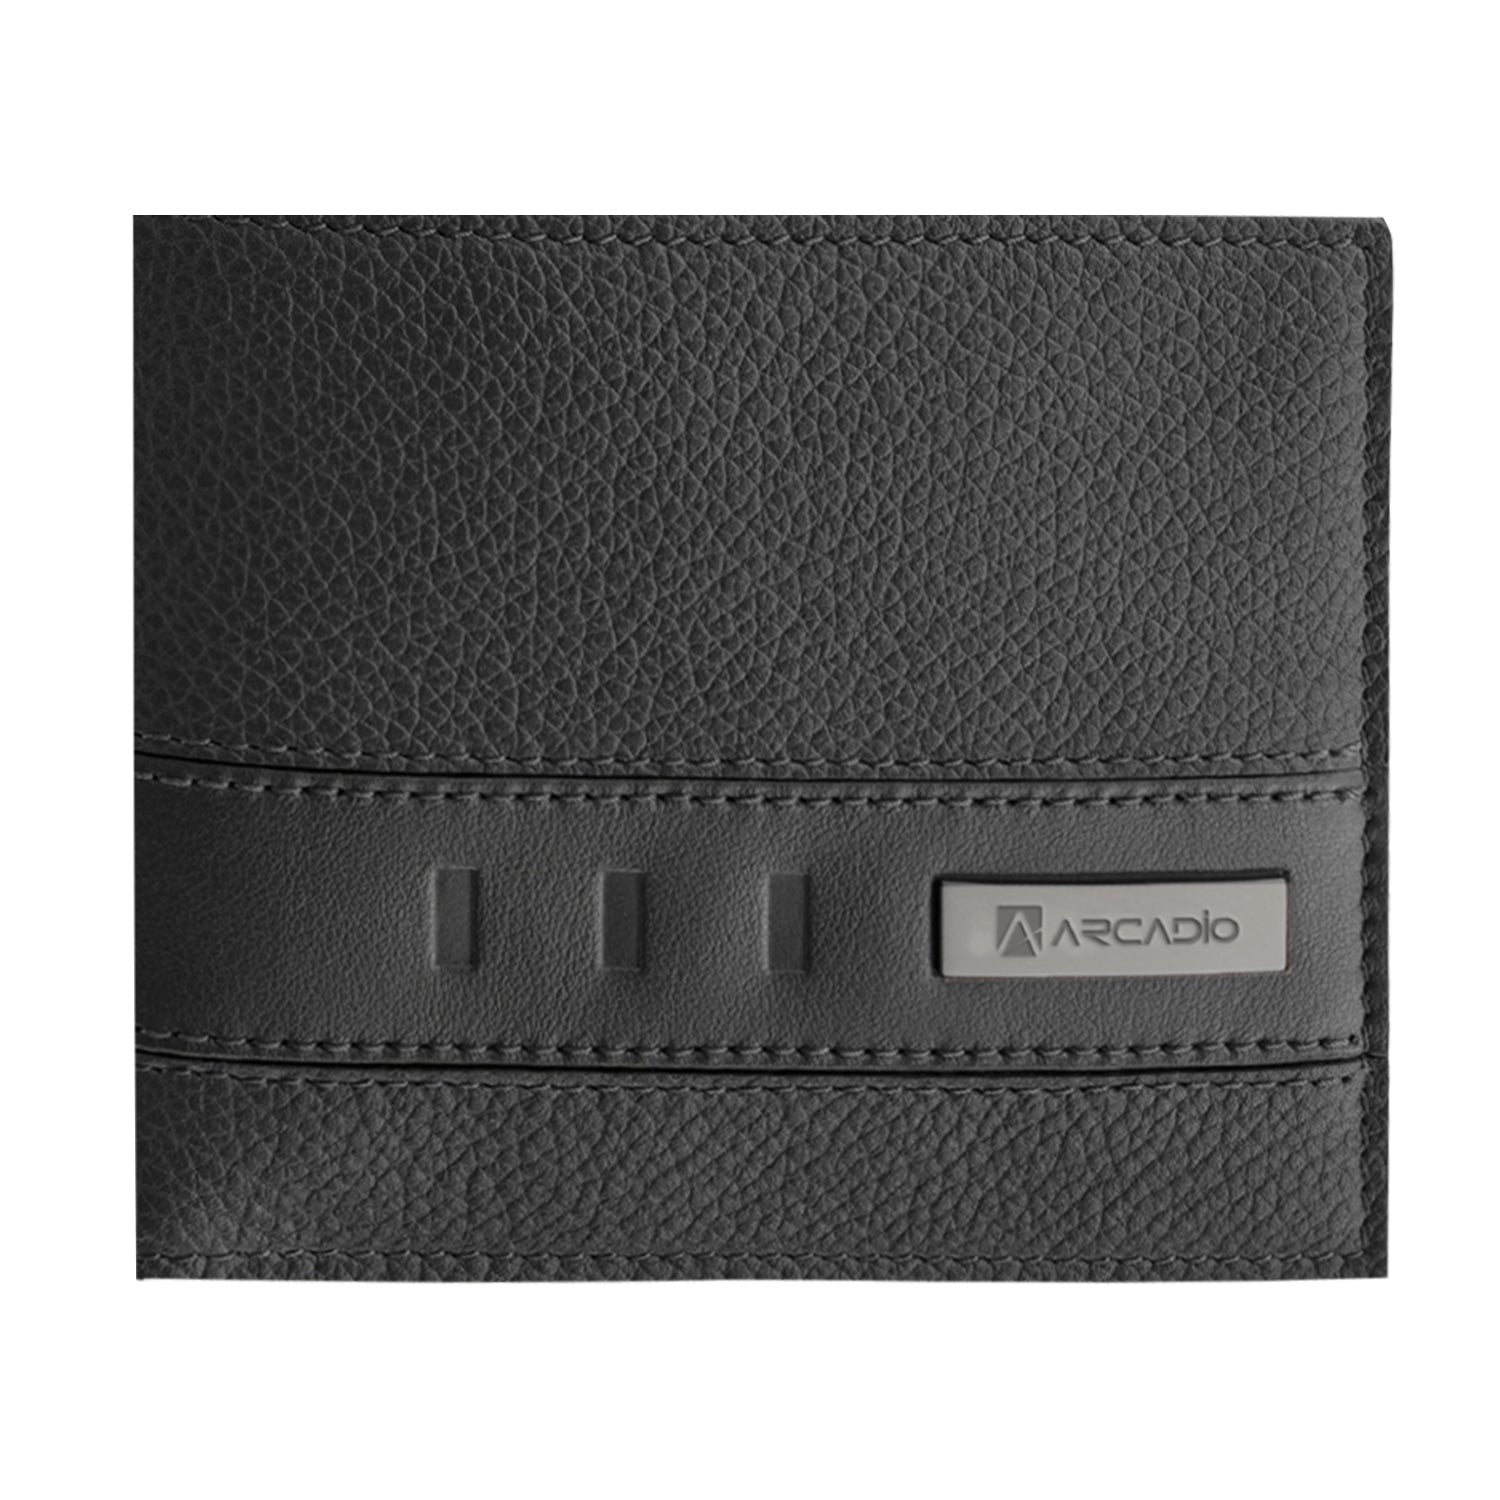 TWIN FUN Dual Toned Leather Wallet ARW1010BK ARCADIO